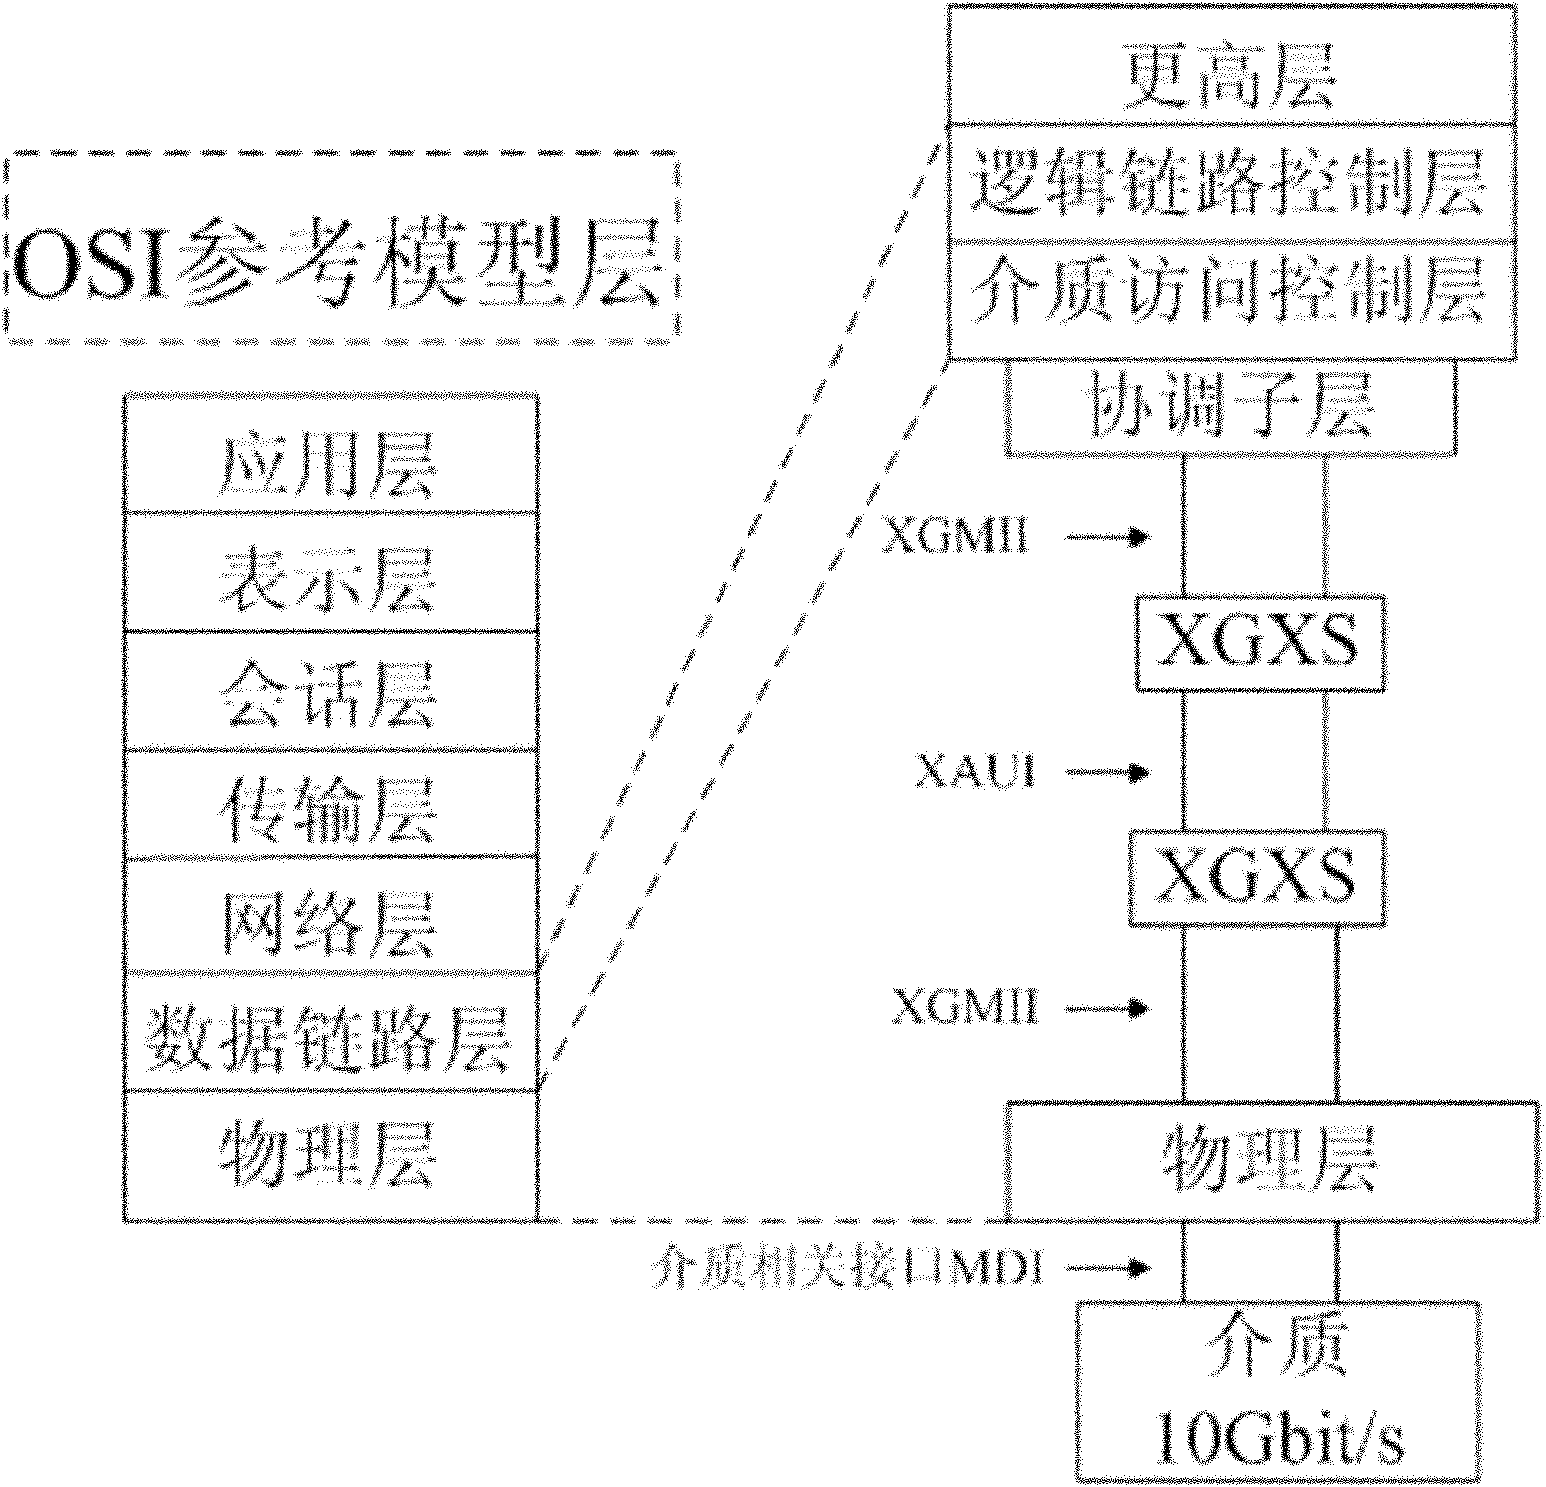 Data processing method and device for 10 gigabit media independent interface (XGMII) and inter-chip bidirectional handshaking method